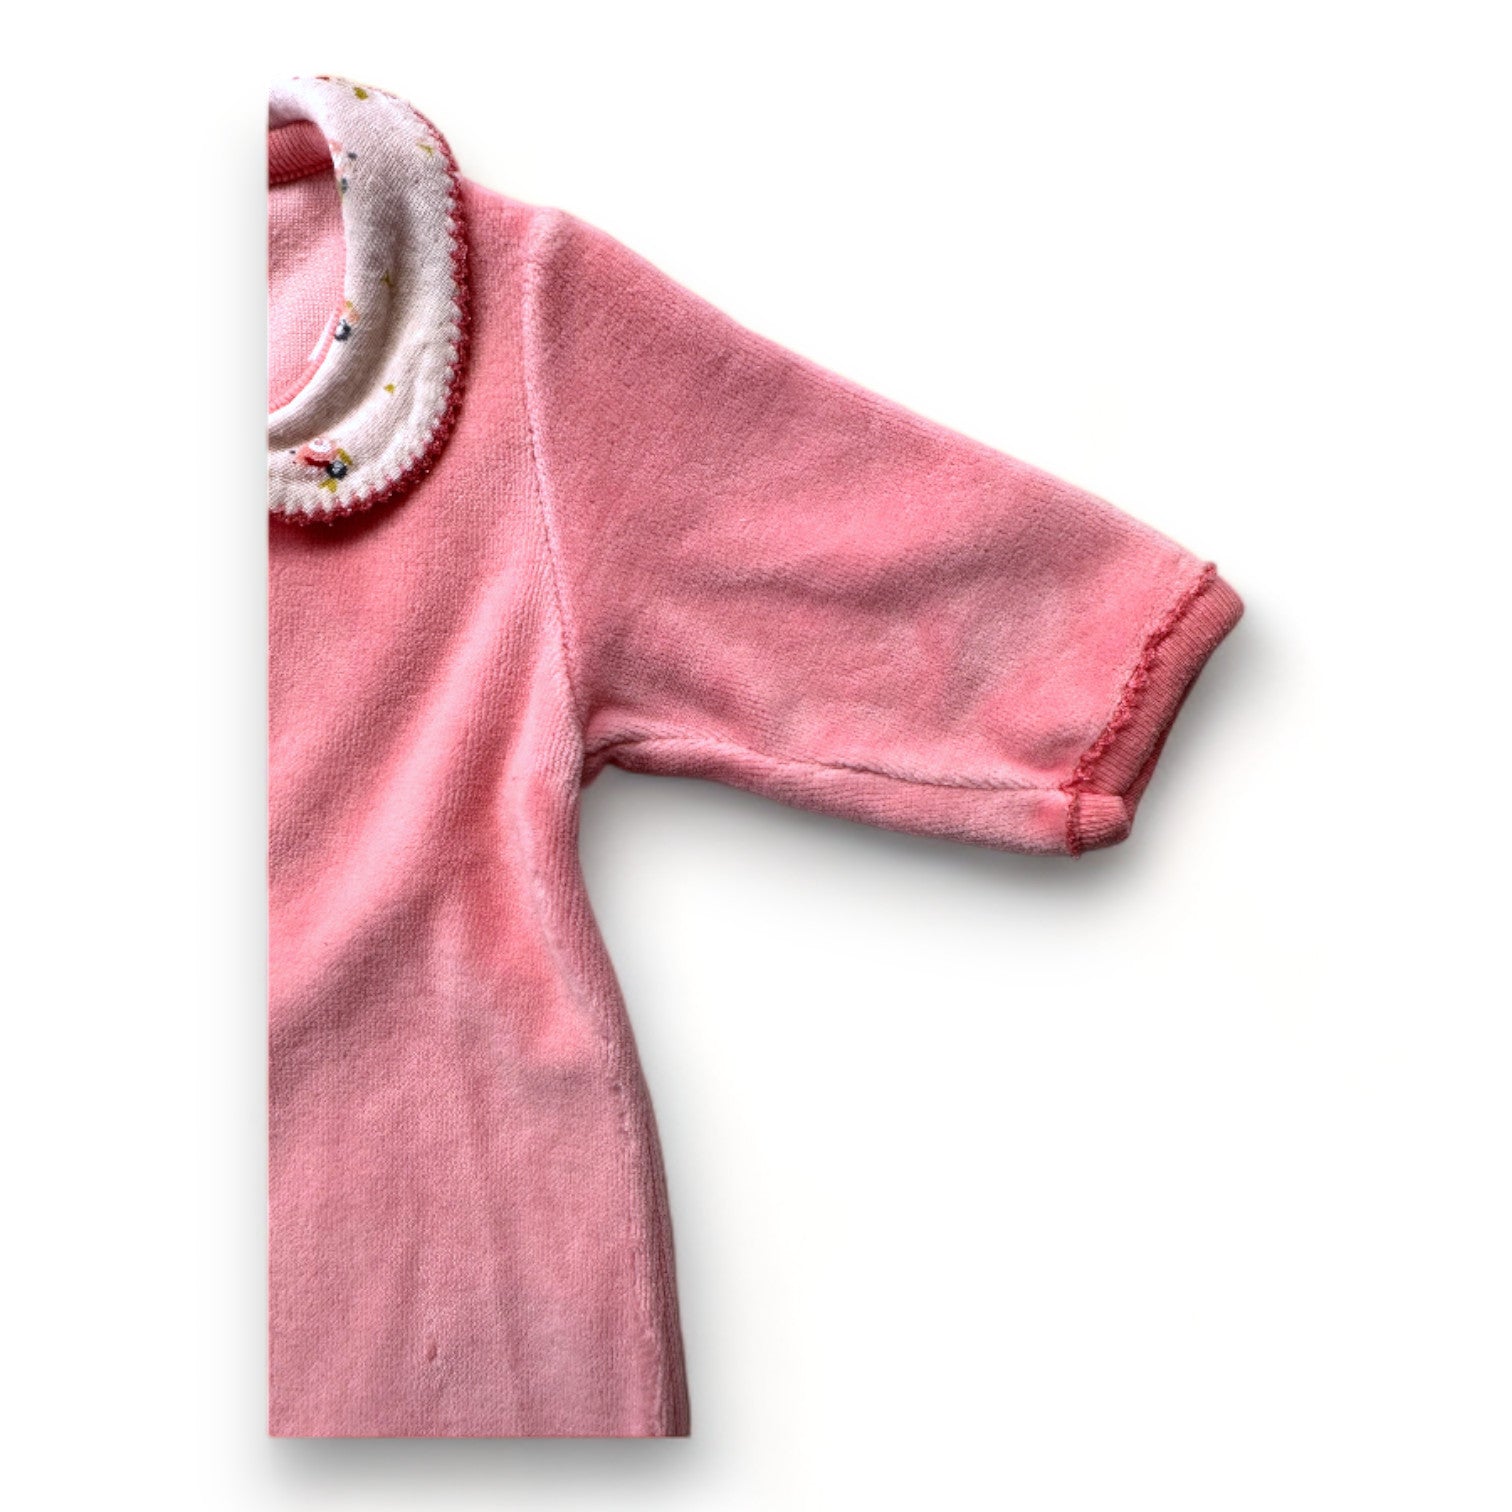 PETIT BATEAU - Pyjama rose avec col à fleurs - 1 mois